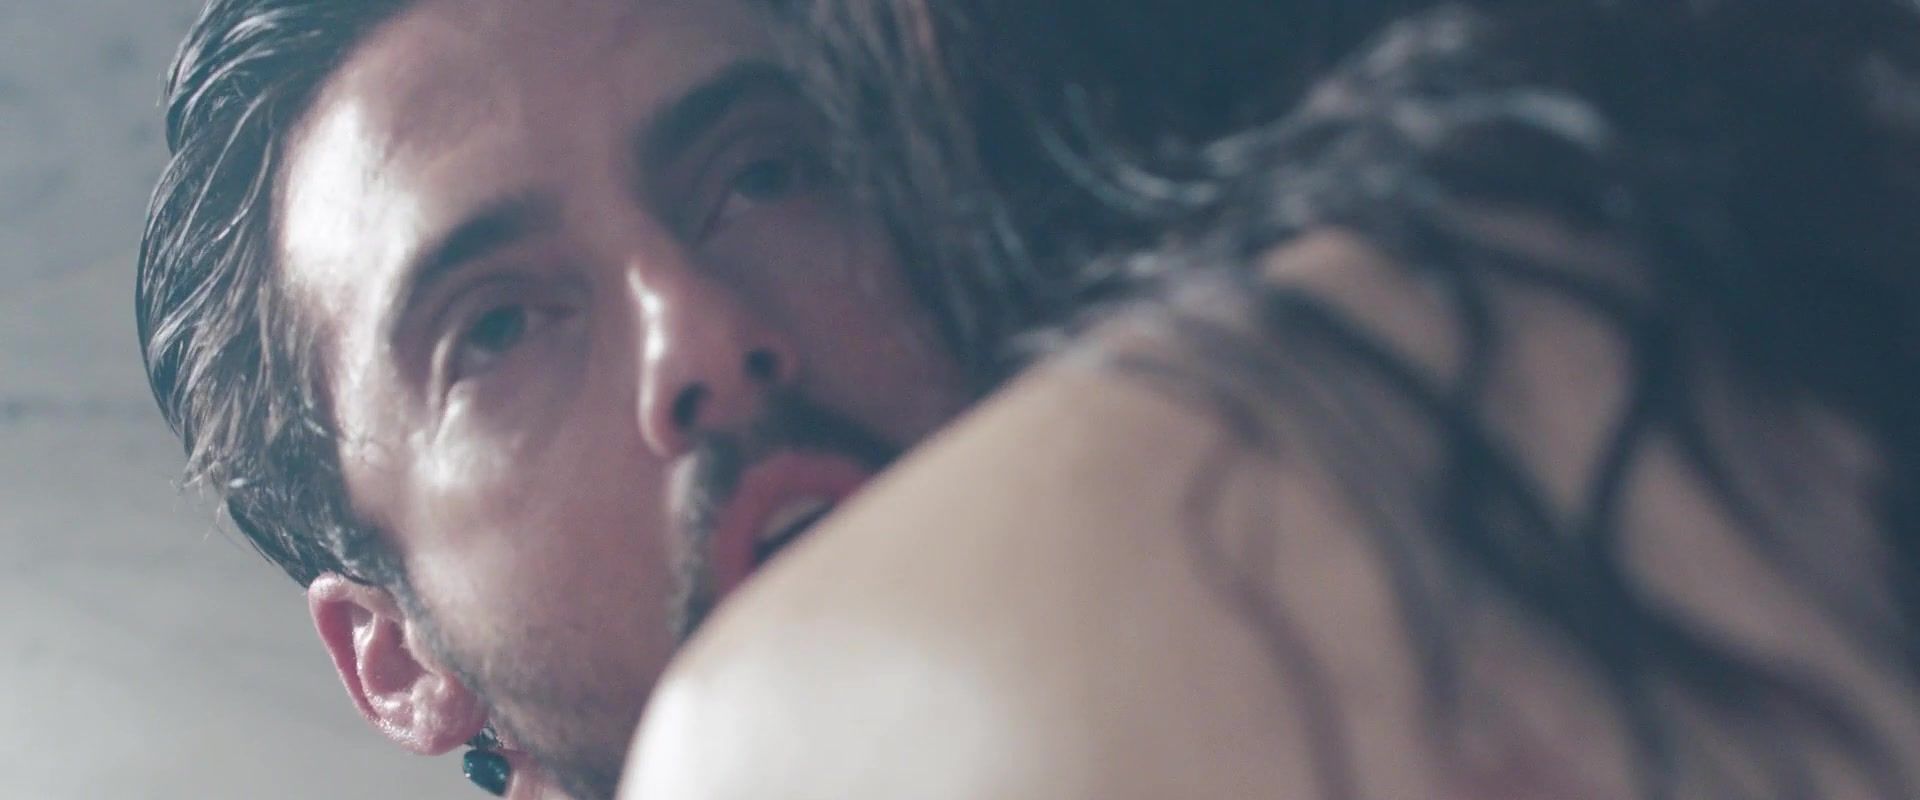 Ass Licking Josephine de La Baume & Roxane Mesquida - Kiss Of The Damned (2012) GrannyCinema - 1